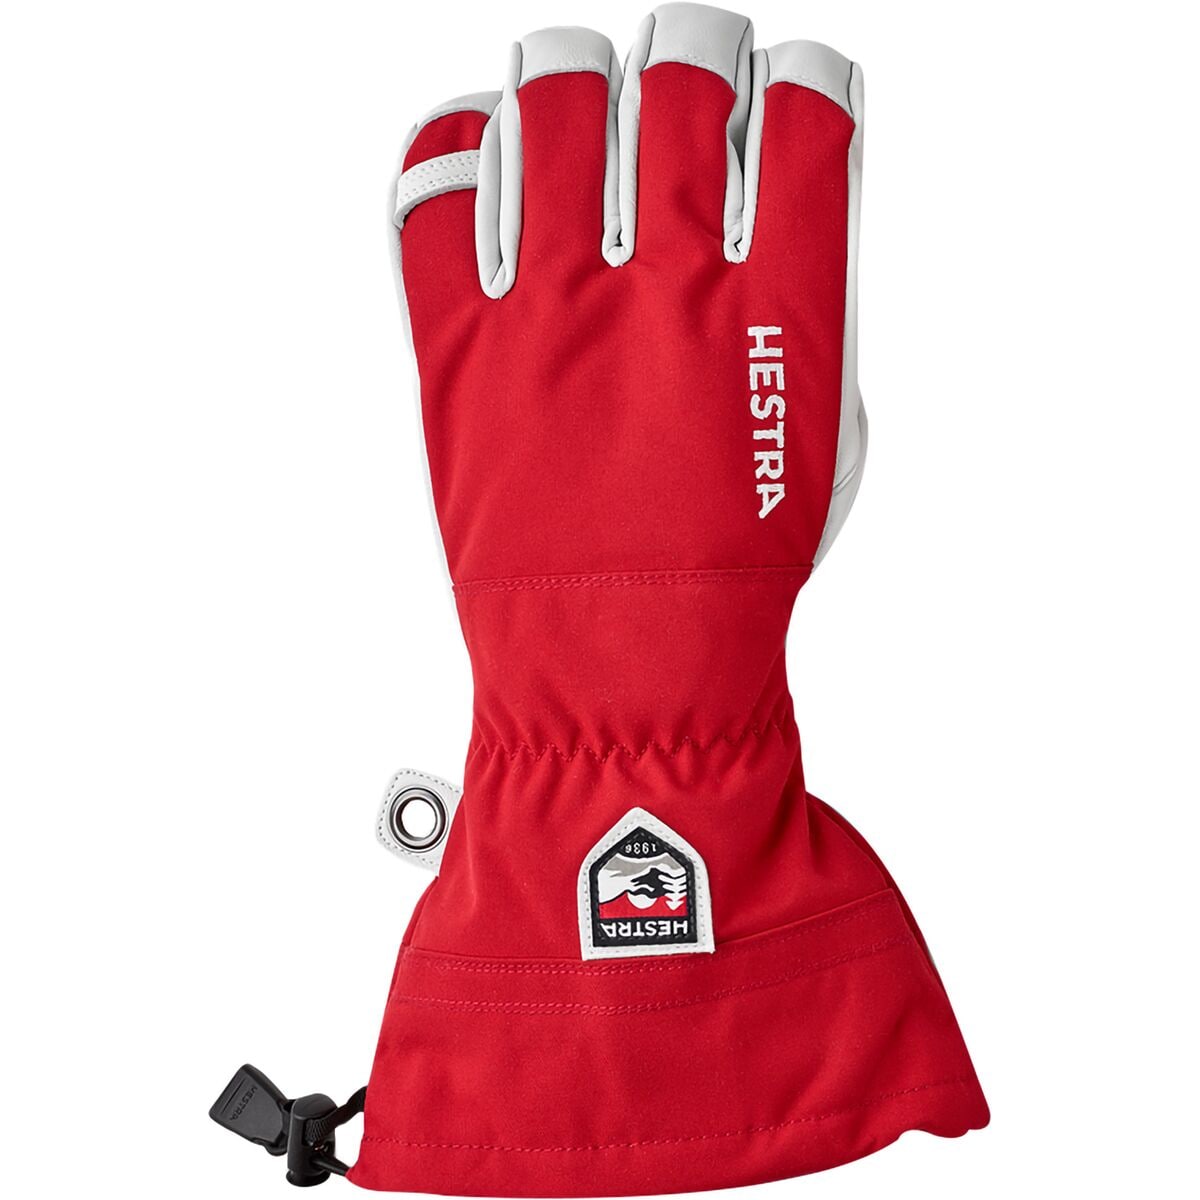 Hestra Heli Glove - Men's